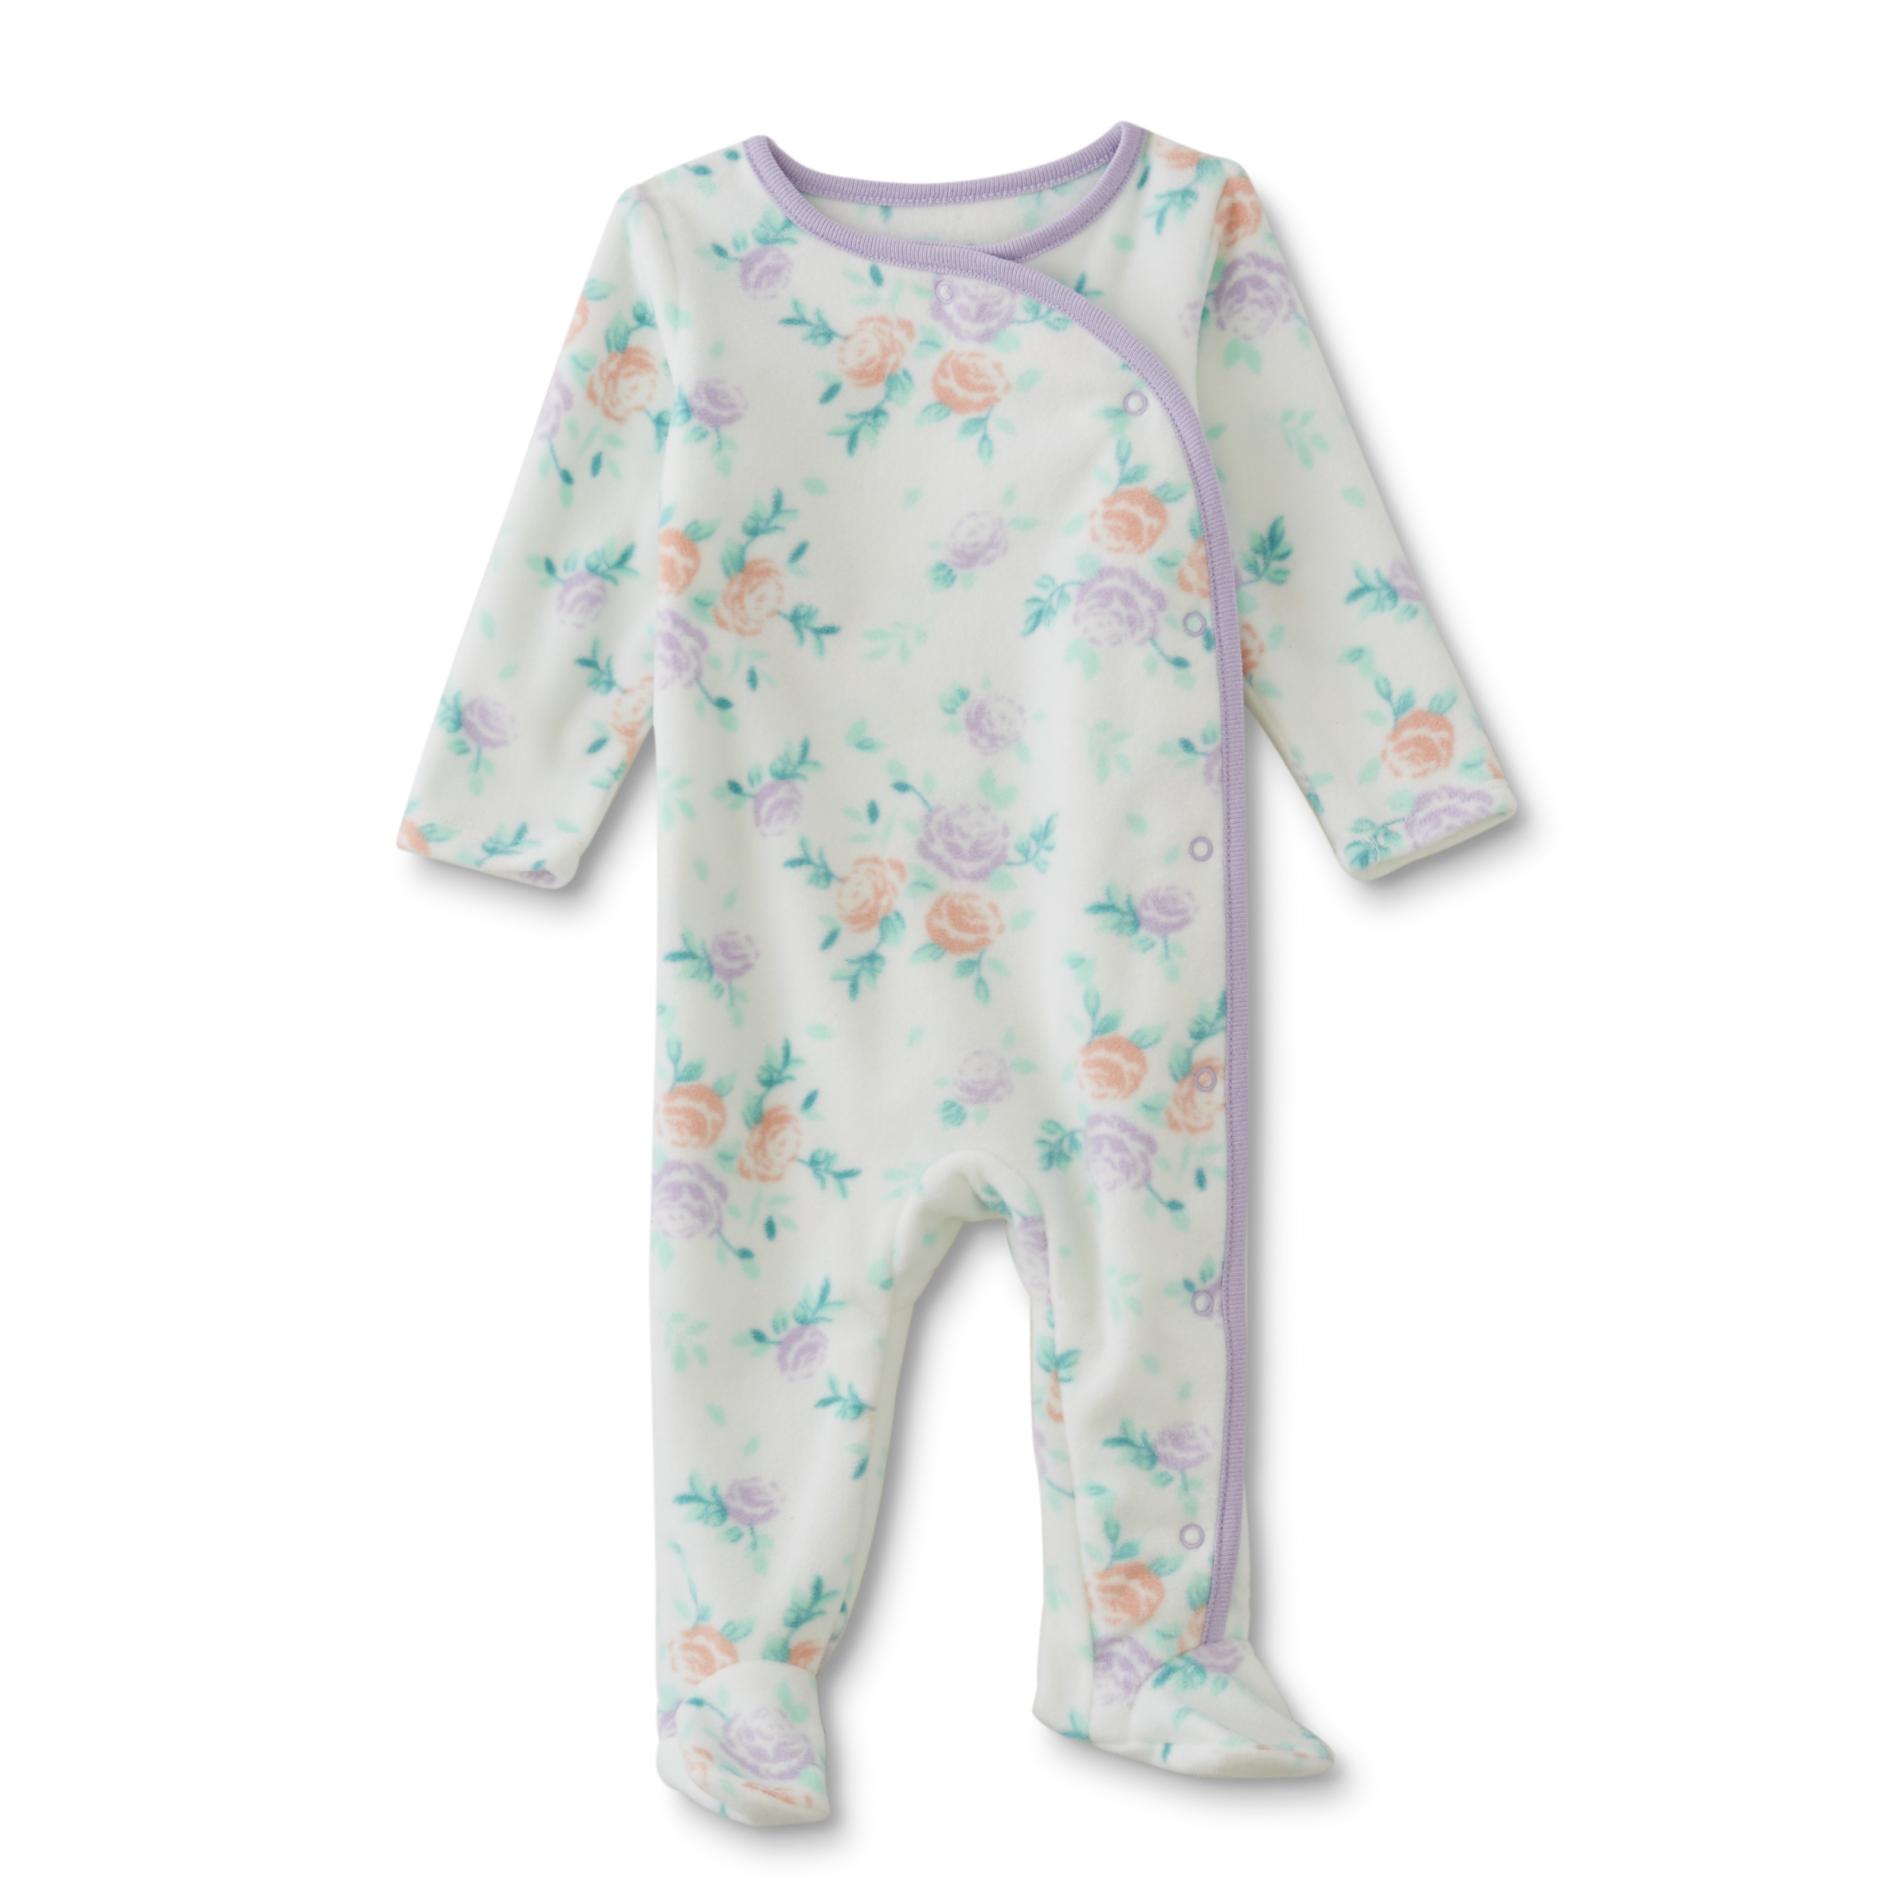 Little Wonders Newborn Girls' Fleece Sleeper Pajamas - Floral